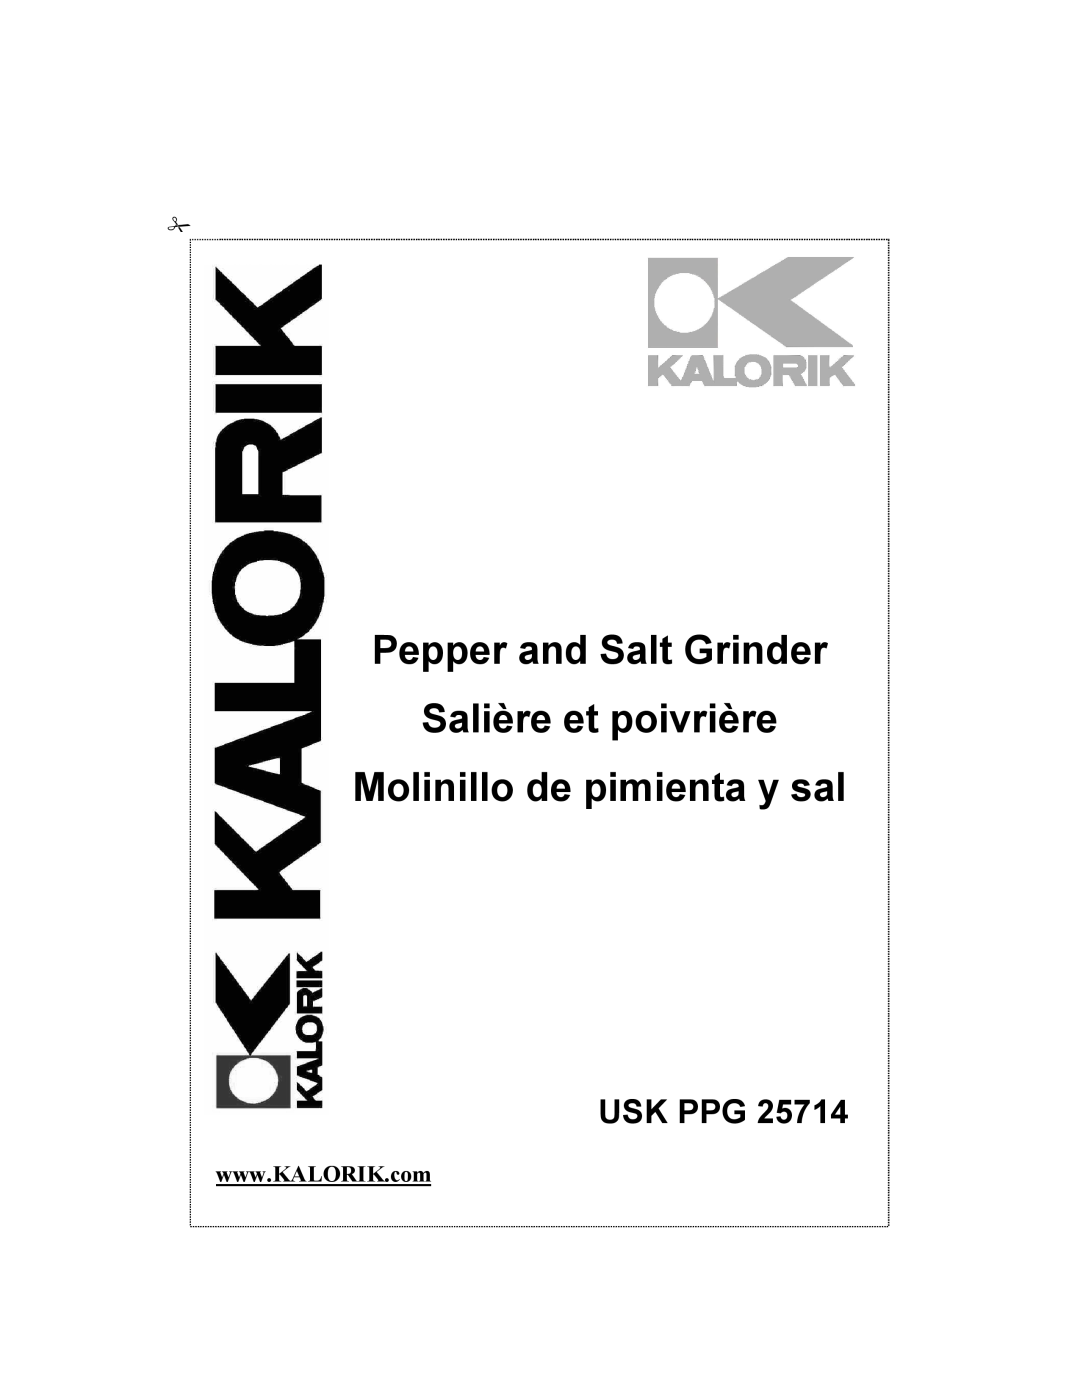 Kalorik USK PPG 25714 manual Pepper and Salt Grinder Salière et poivrière, Molinillo de pimienta y sal, Usk Ppg 